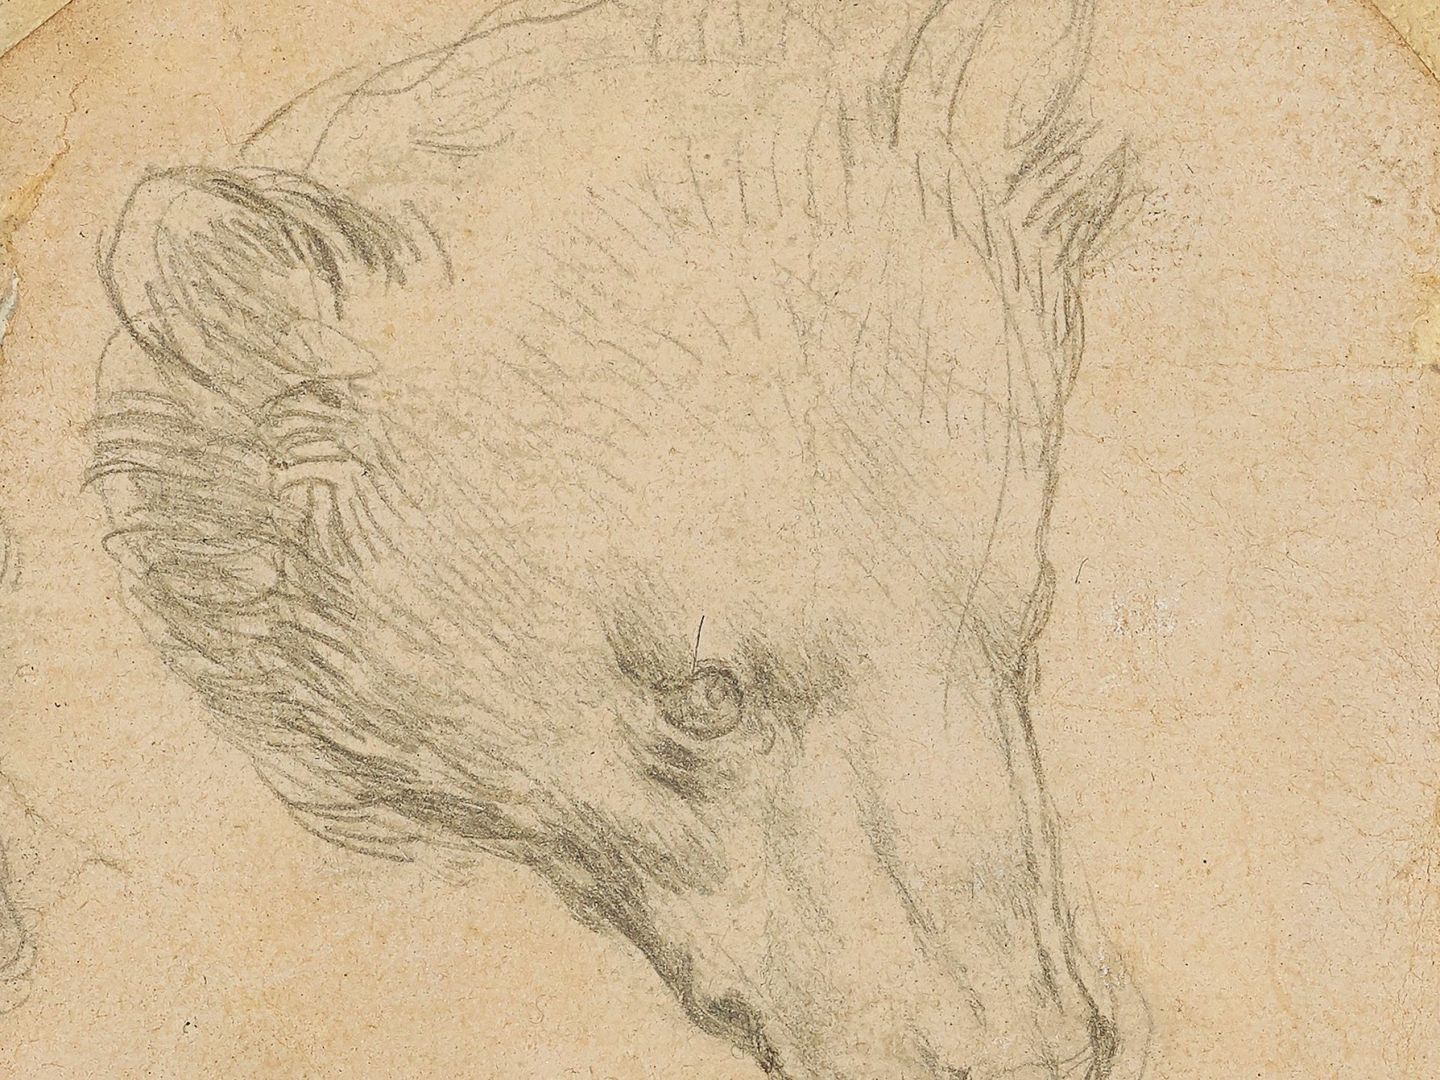 'Head of a bear'. (EFE)